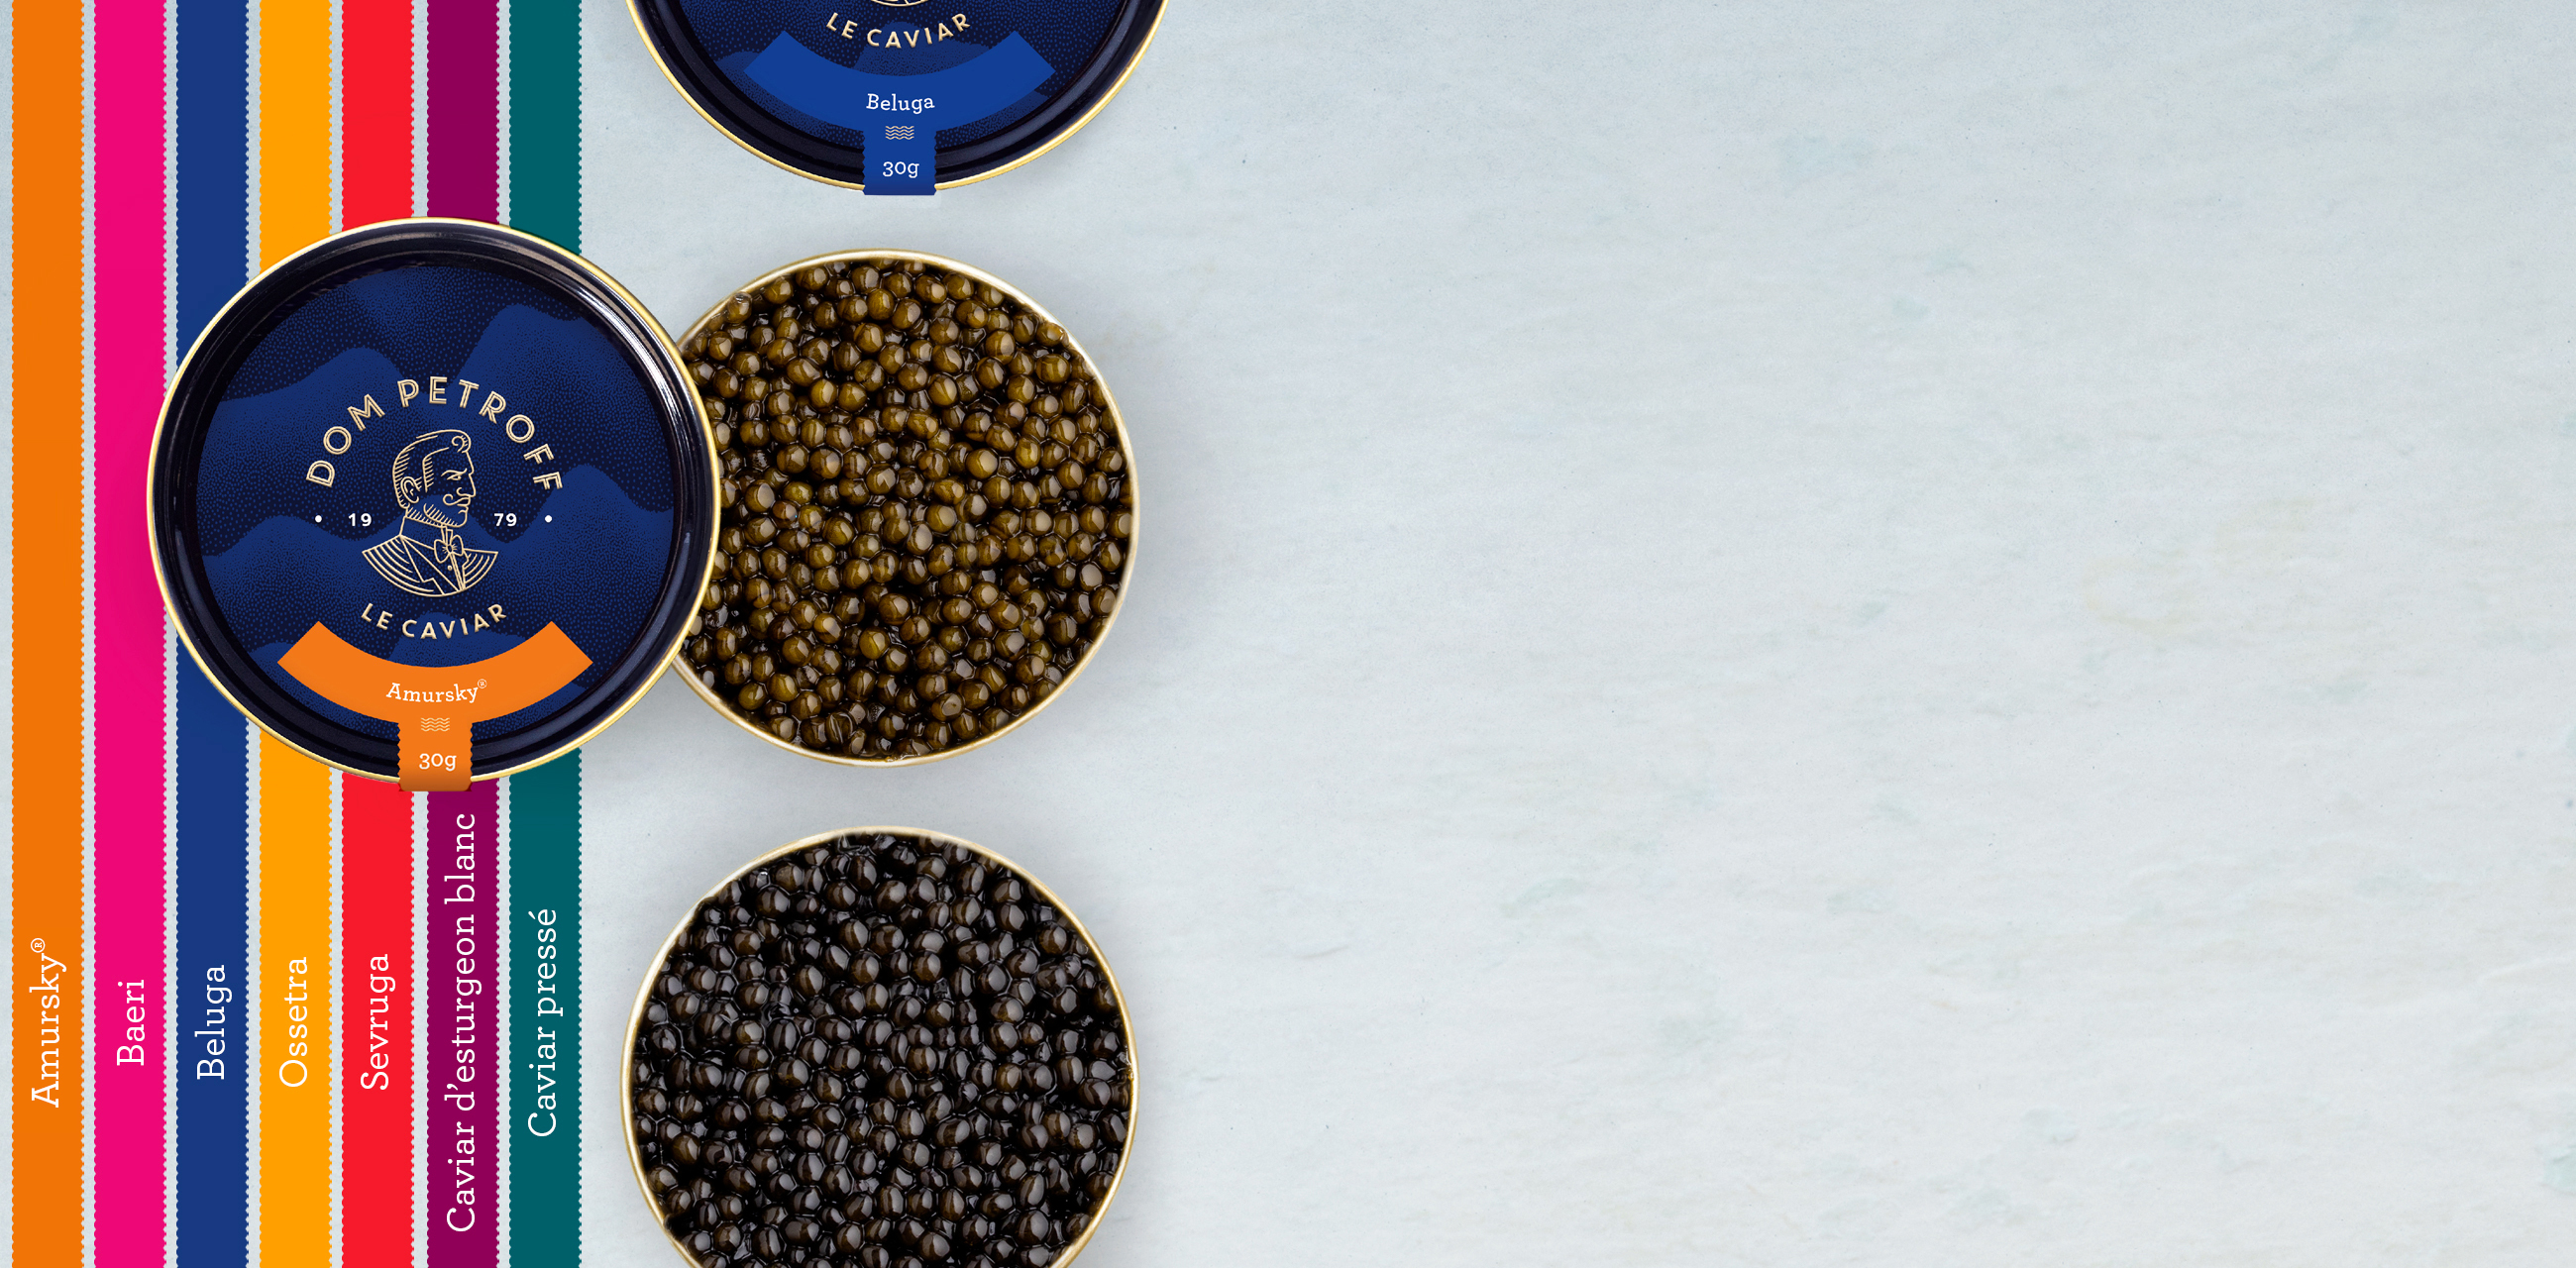 Caviar d'esturgeon blanc - 30g